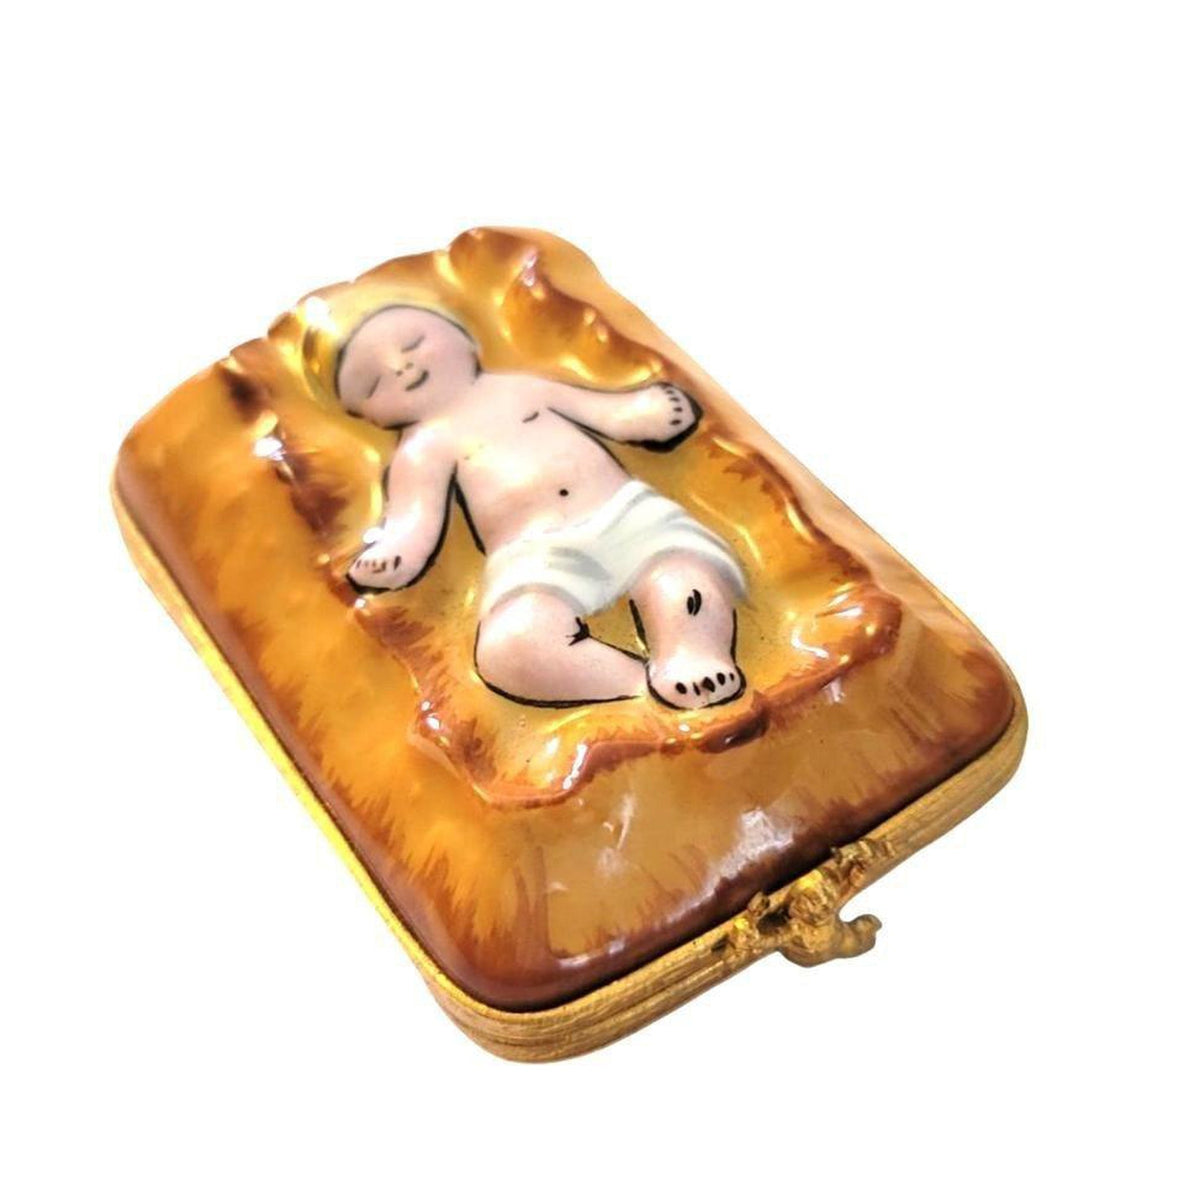 Baby Jesus on Straw for Manger Scene Limoges Box Figurine - Limoges Box Boutique